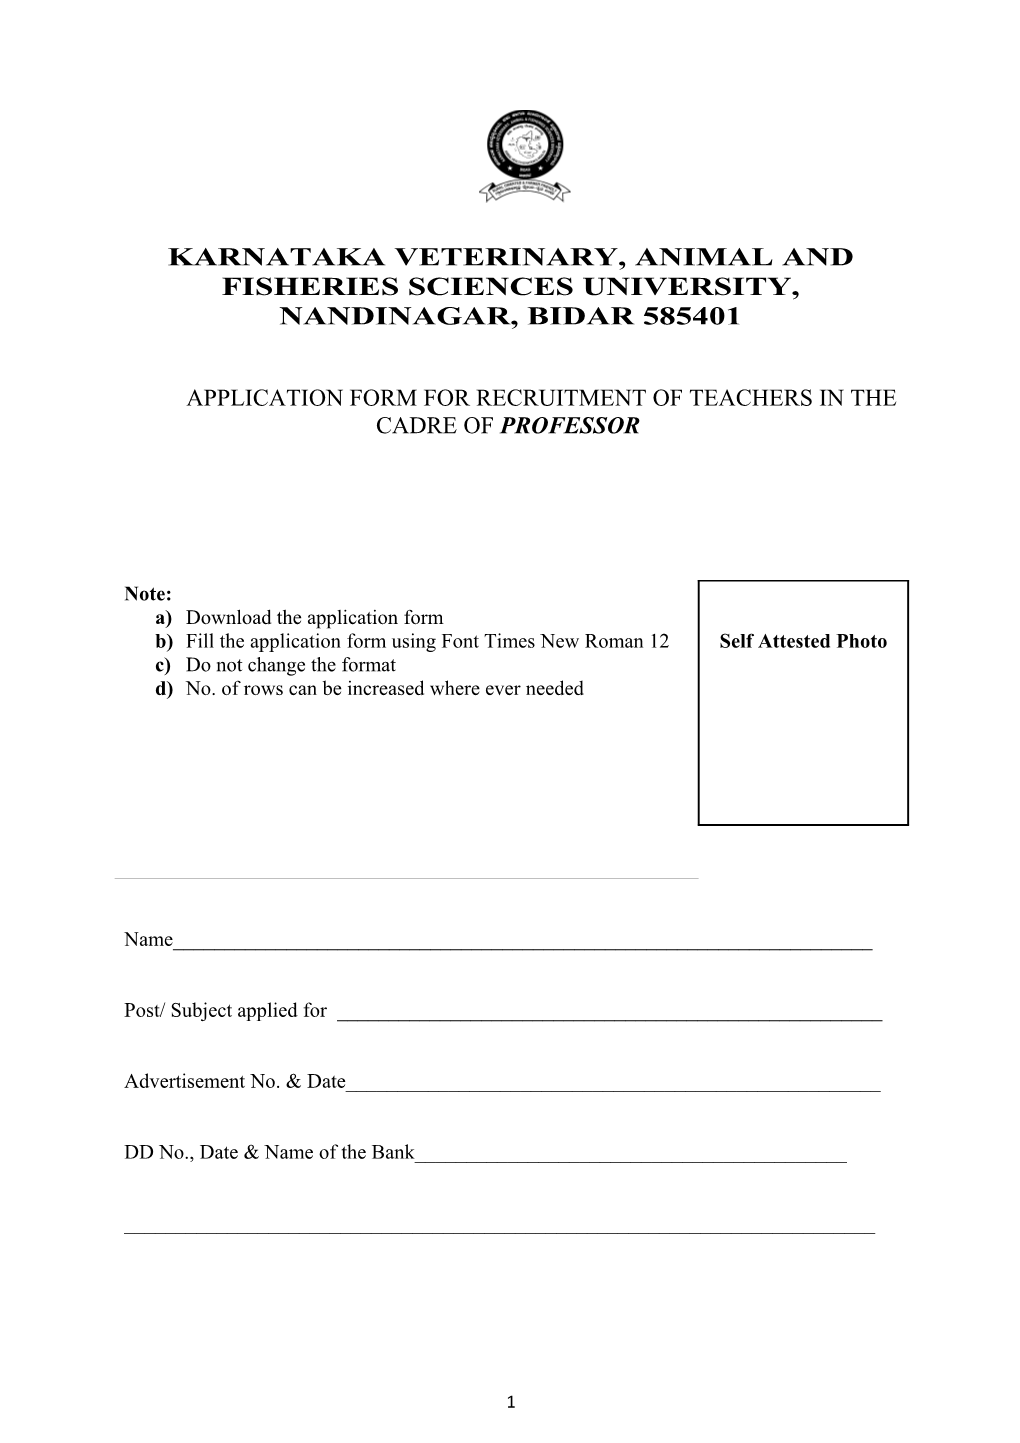 Karnataka Veterinary, Animal and Fisheries Sciences University, Nandinagar, Bidar 585401